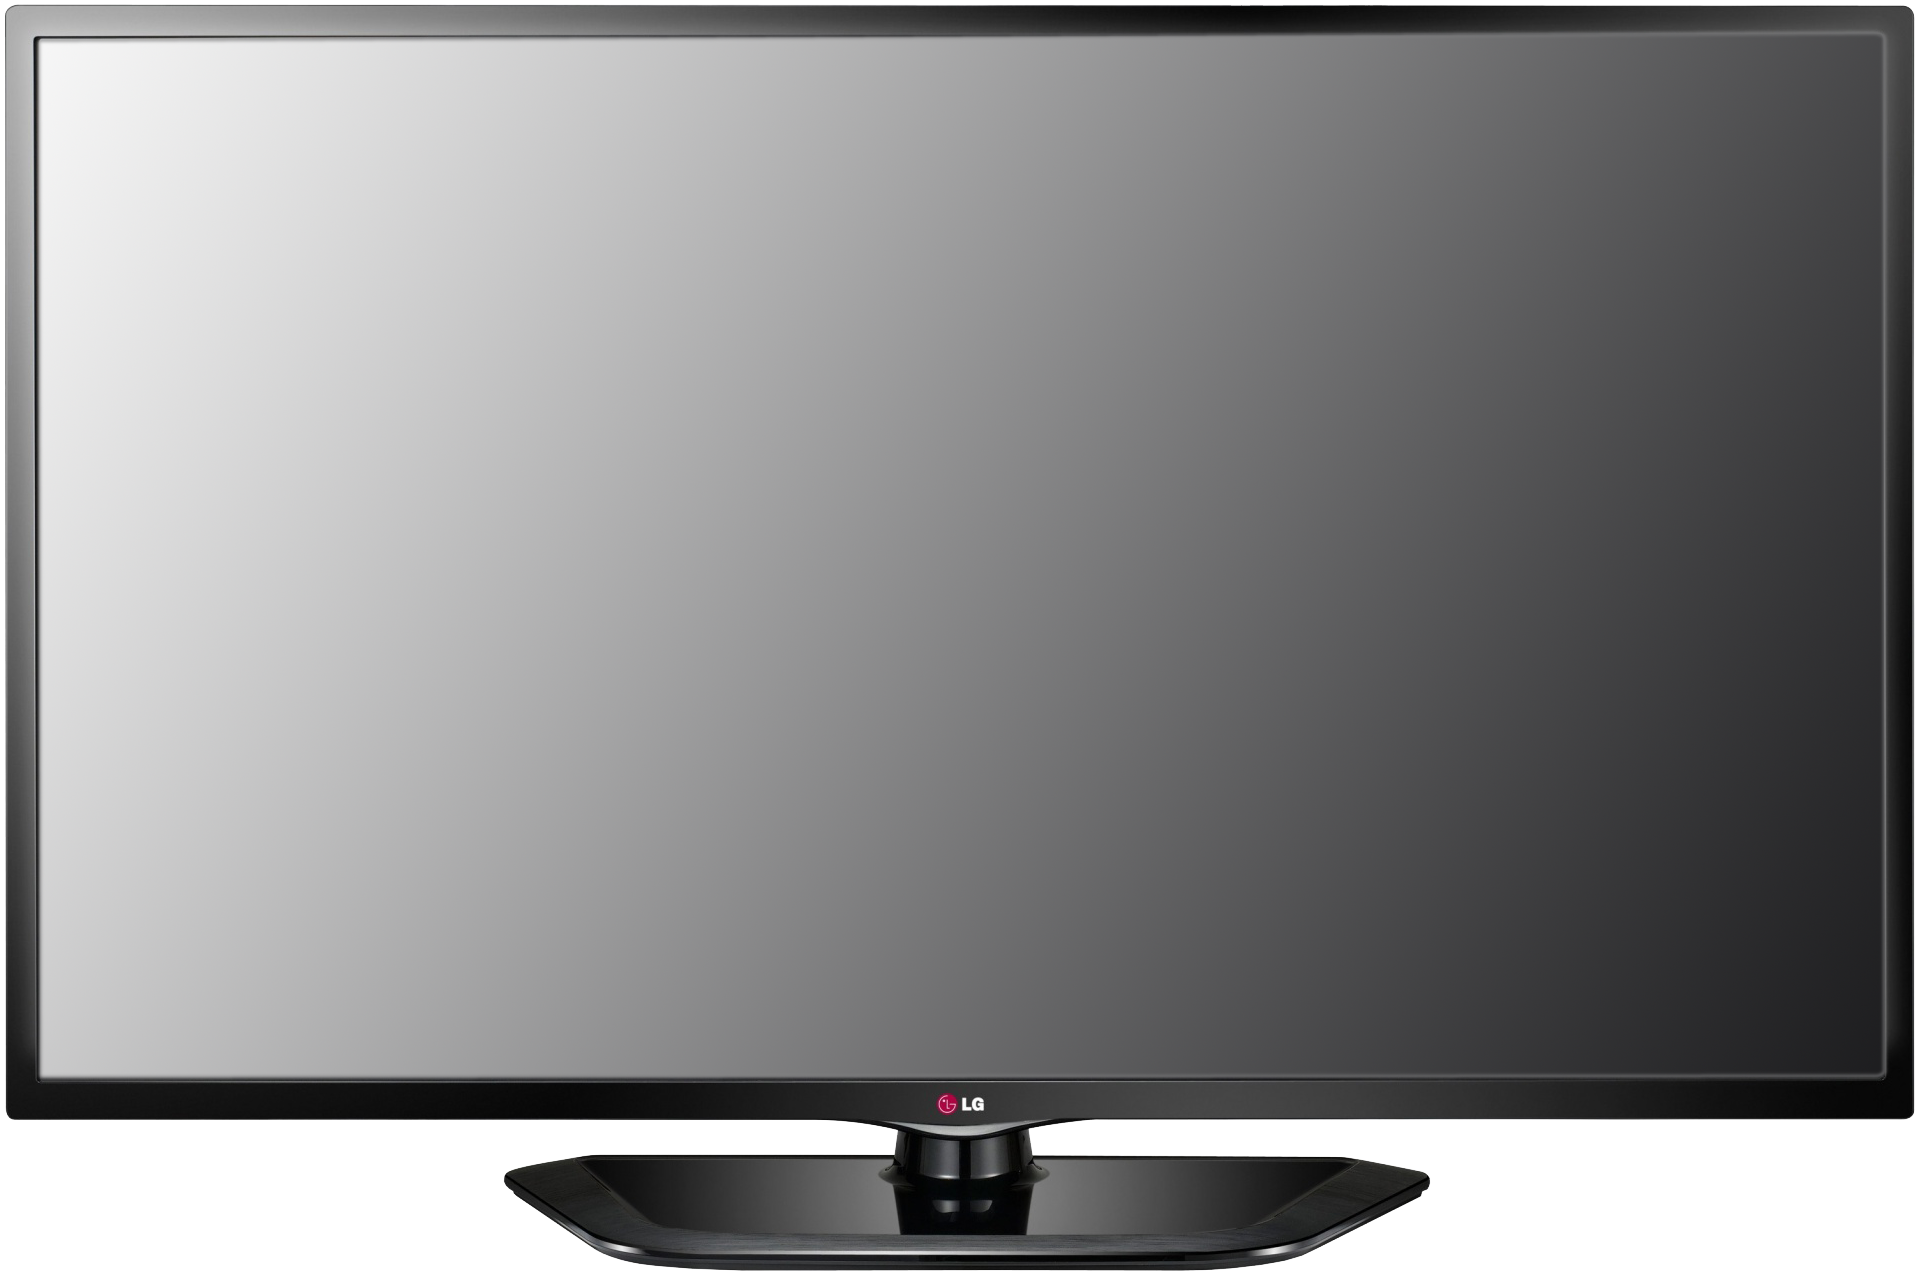 Телевизионный экран. LG 32ln548c. Телевизор/Television "TV (42) LG 43lj594". Телевизор LG 42ln548c 42". Телевизор LG 32ln548c 32".